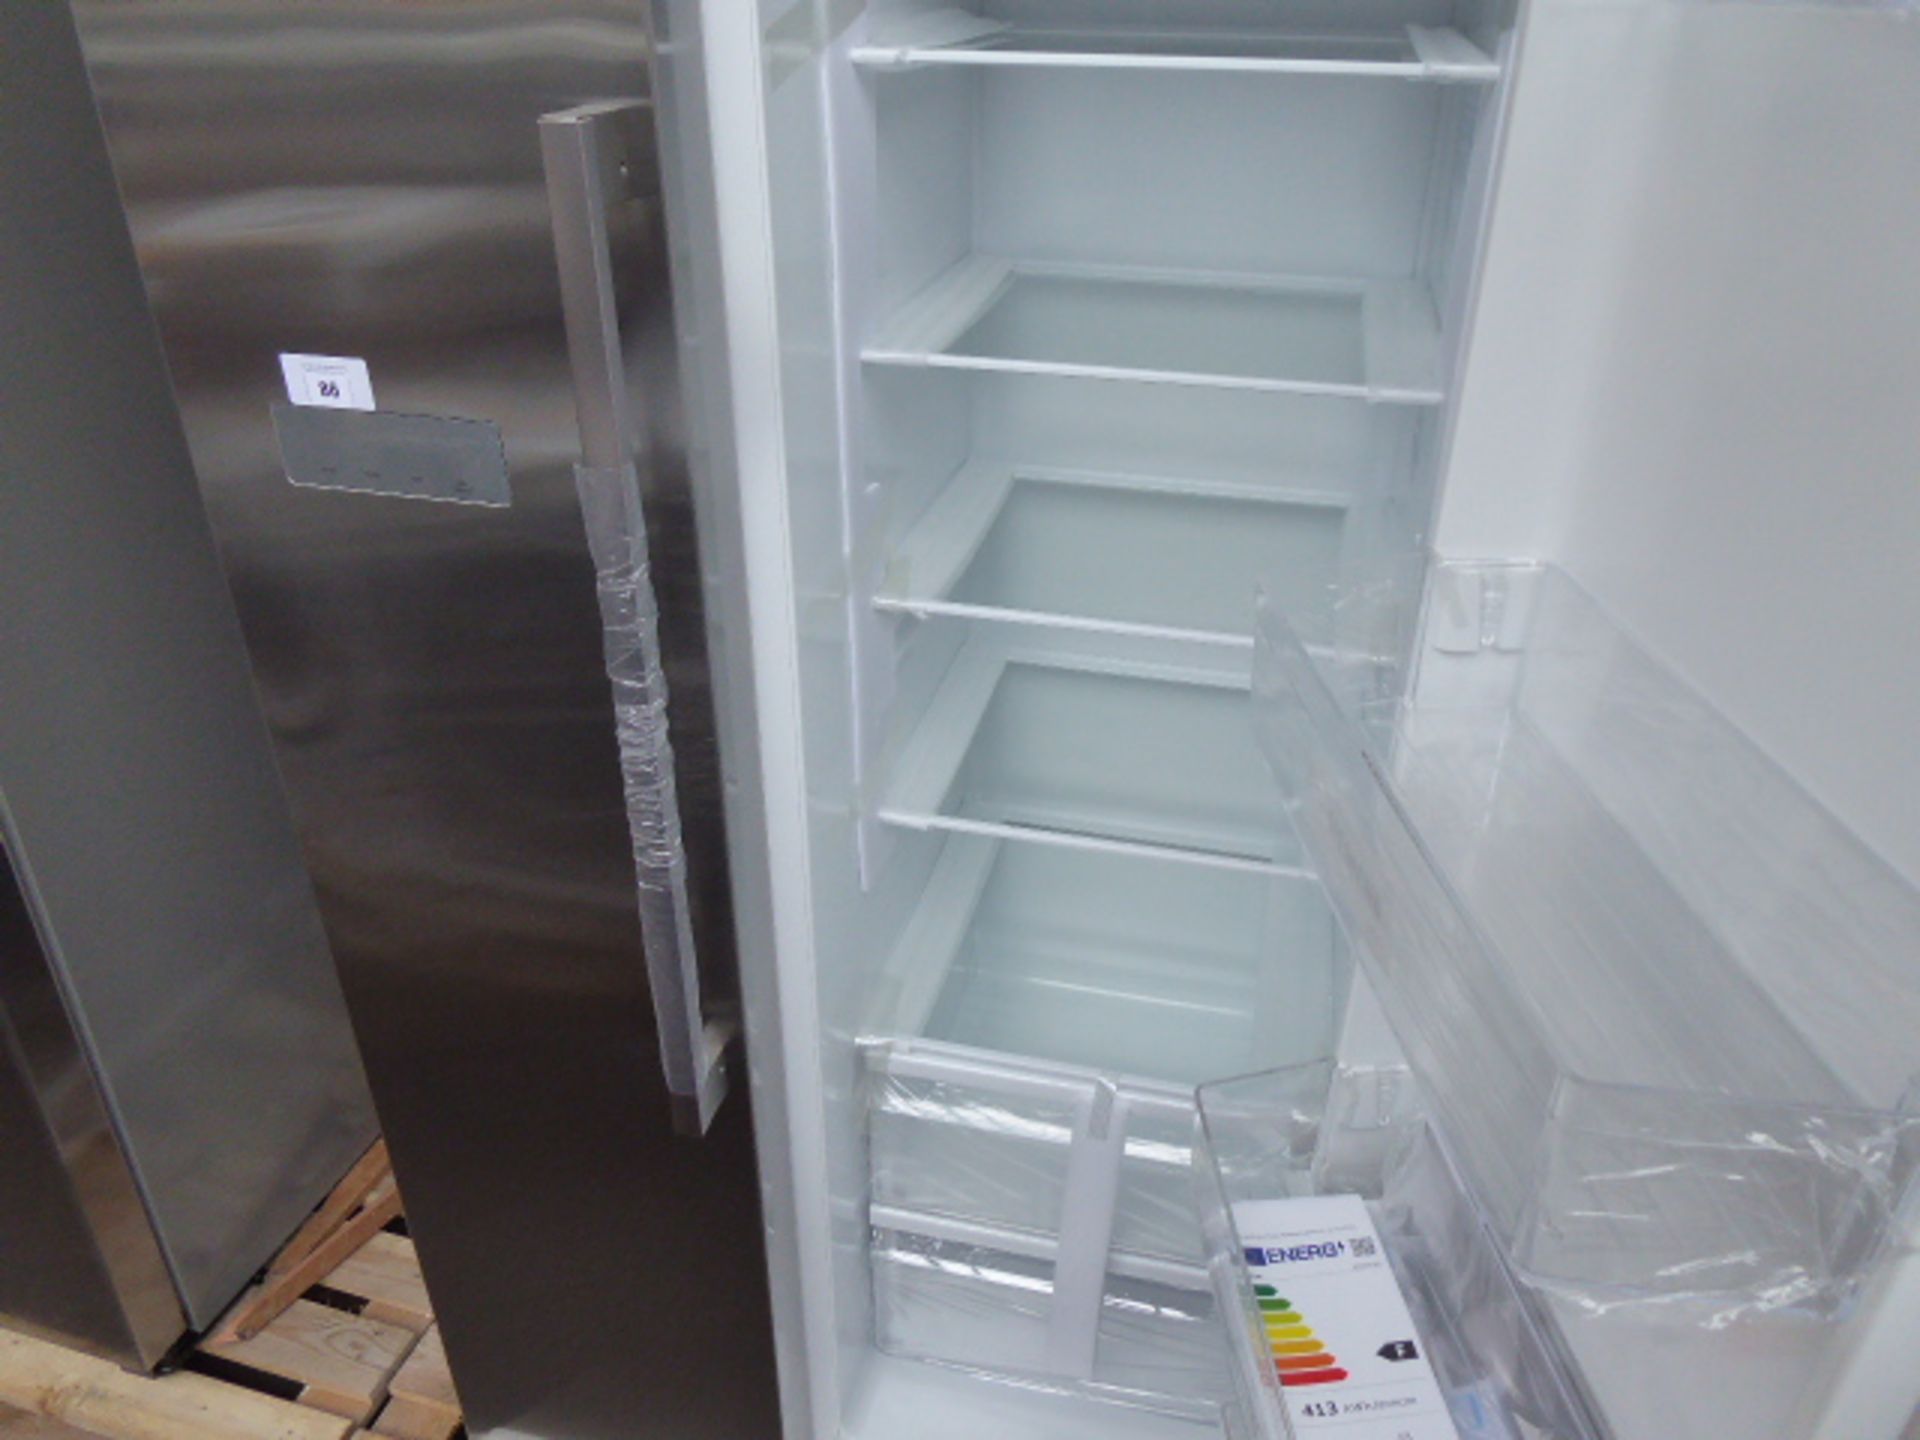 KA93NVIFP-B Siemens Side-by-side fridge-freezer - Image 2 of 2